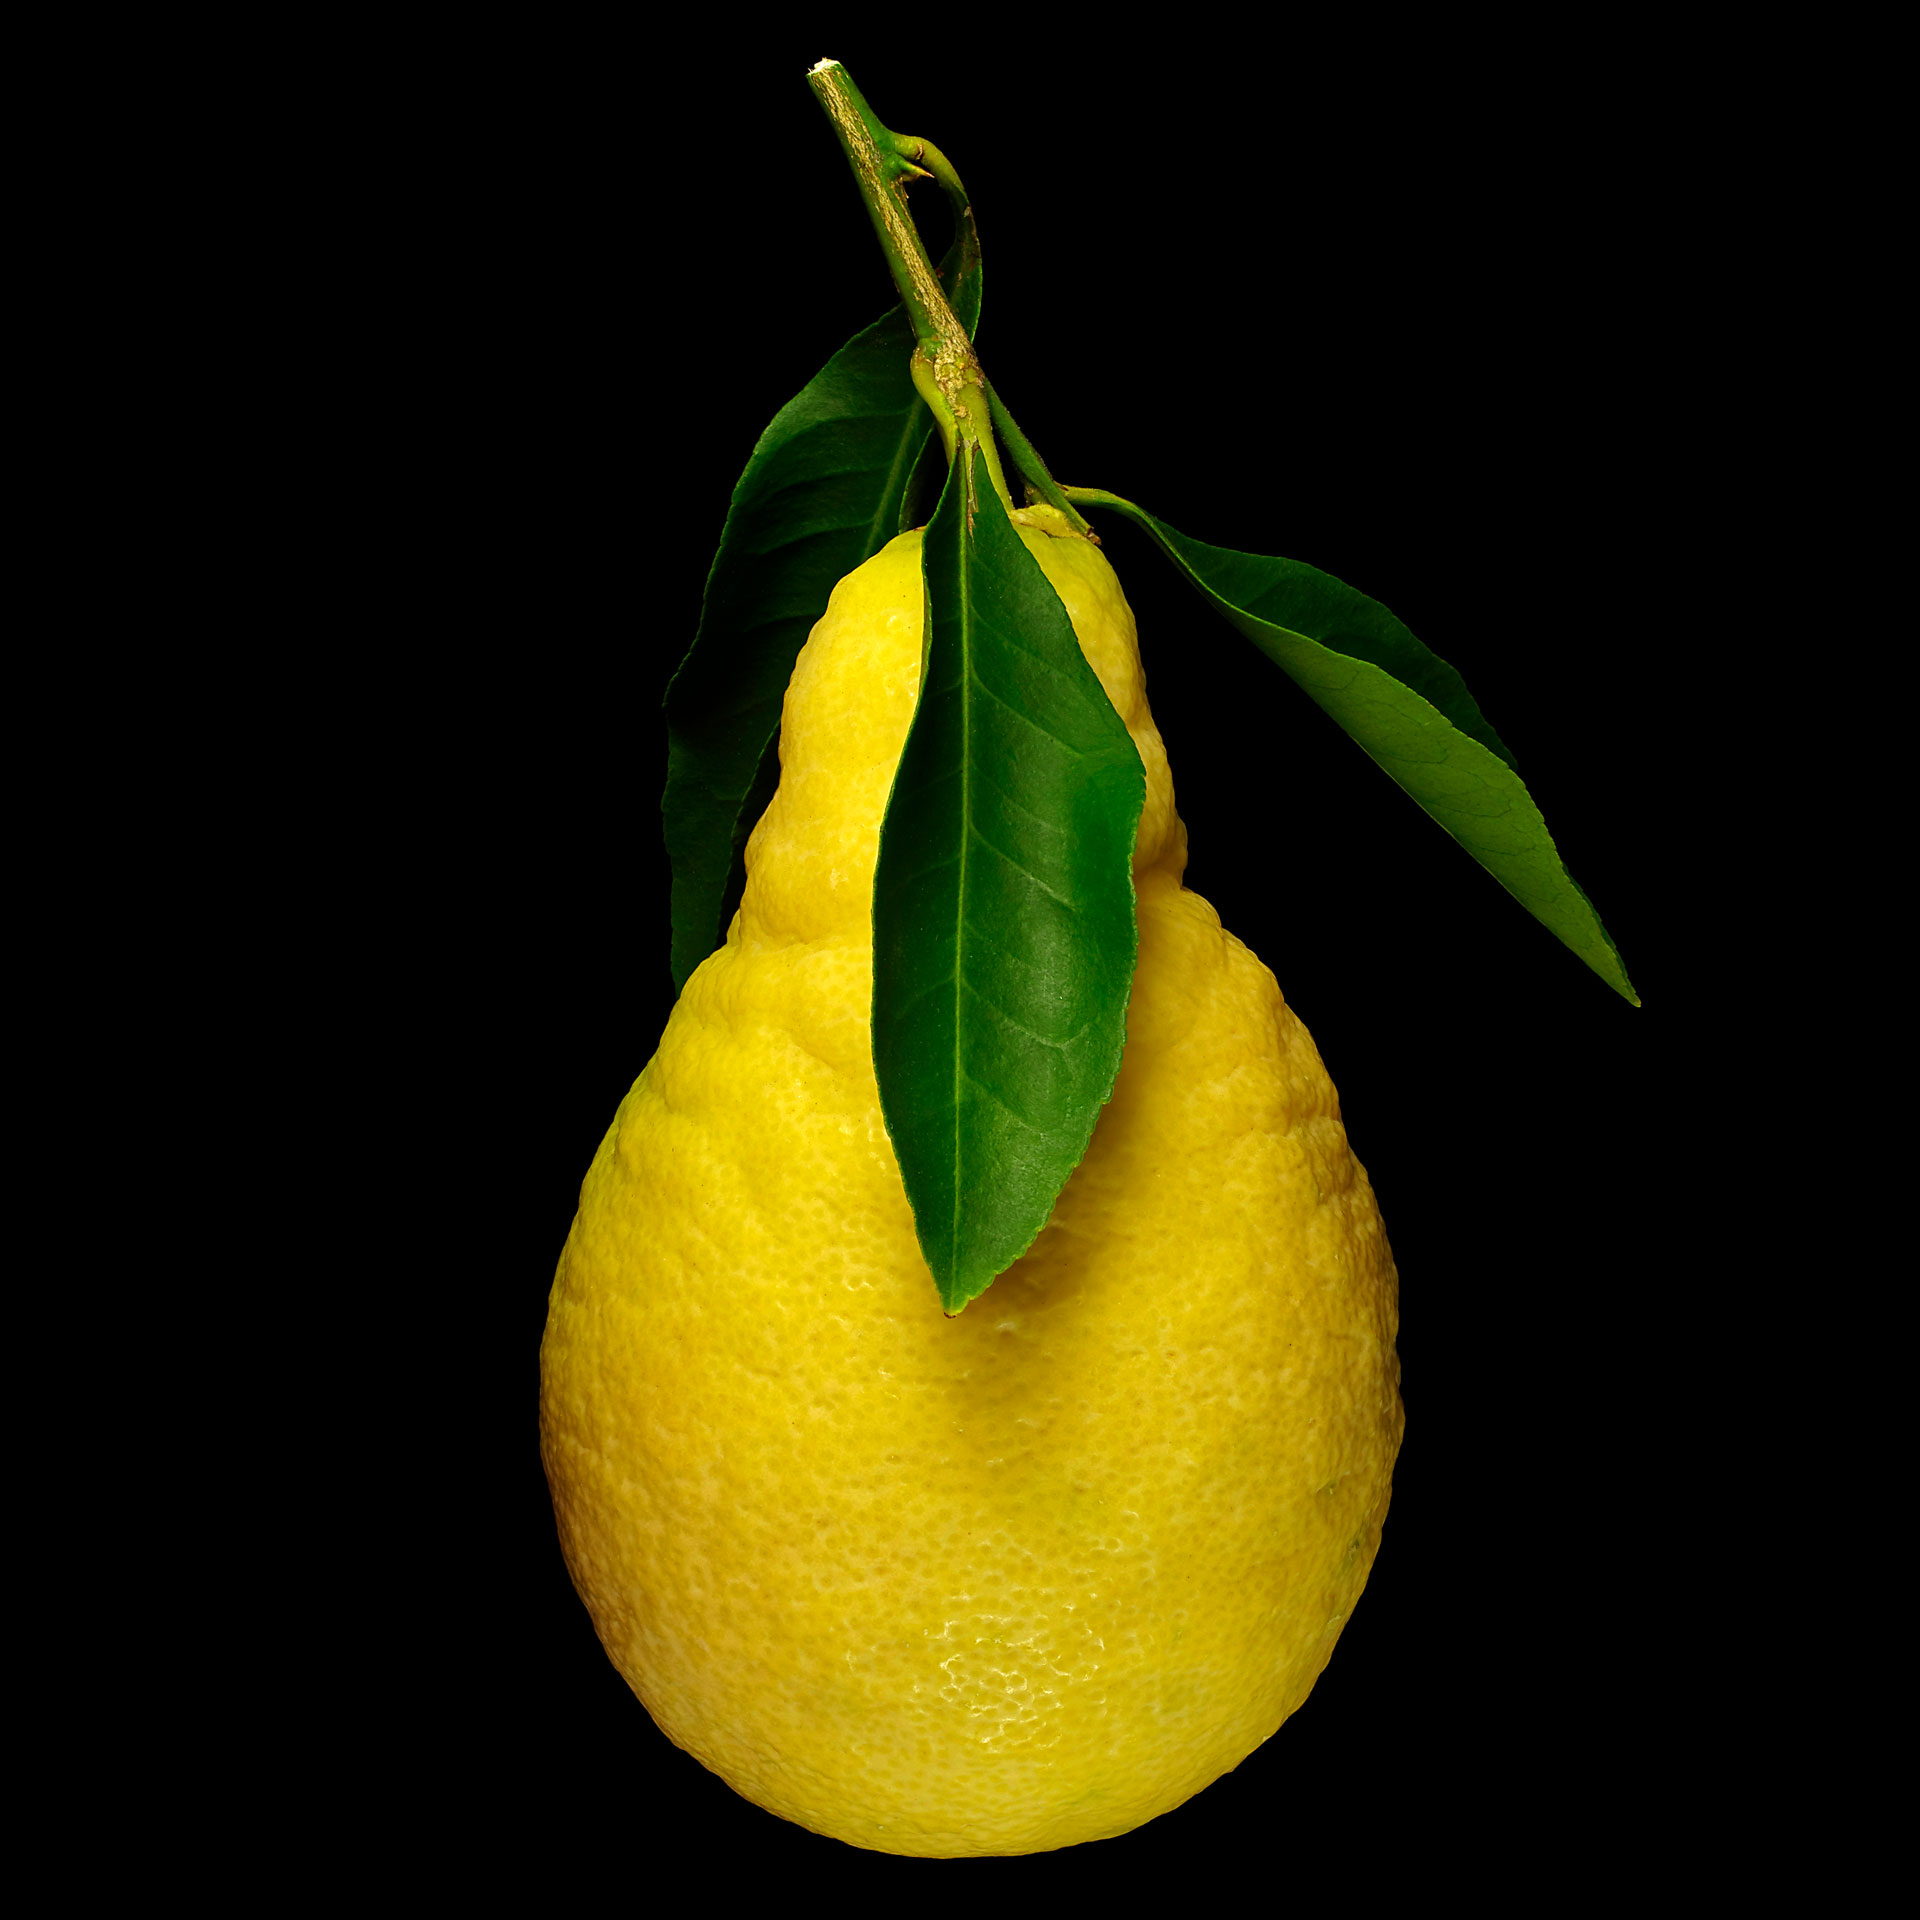 Pear lemon: Citrus × lumia ‚Pyriformis‘